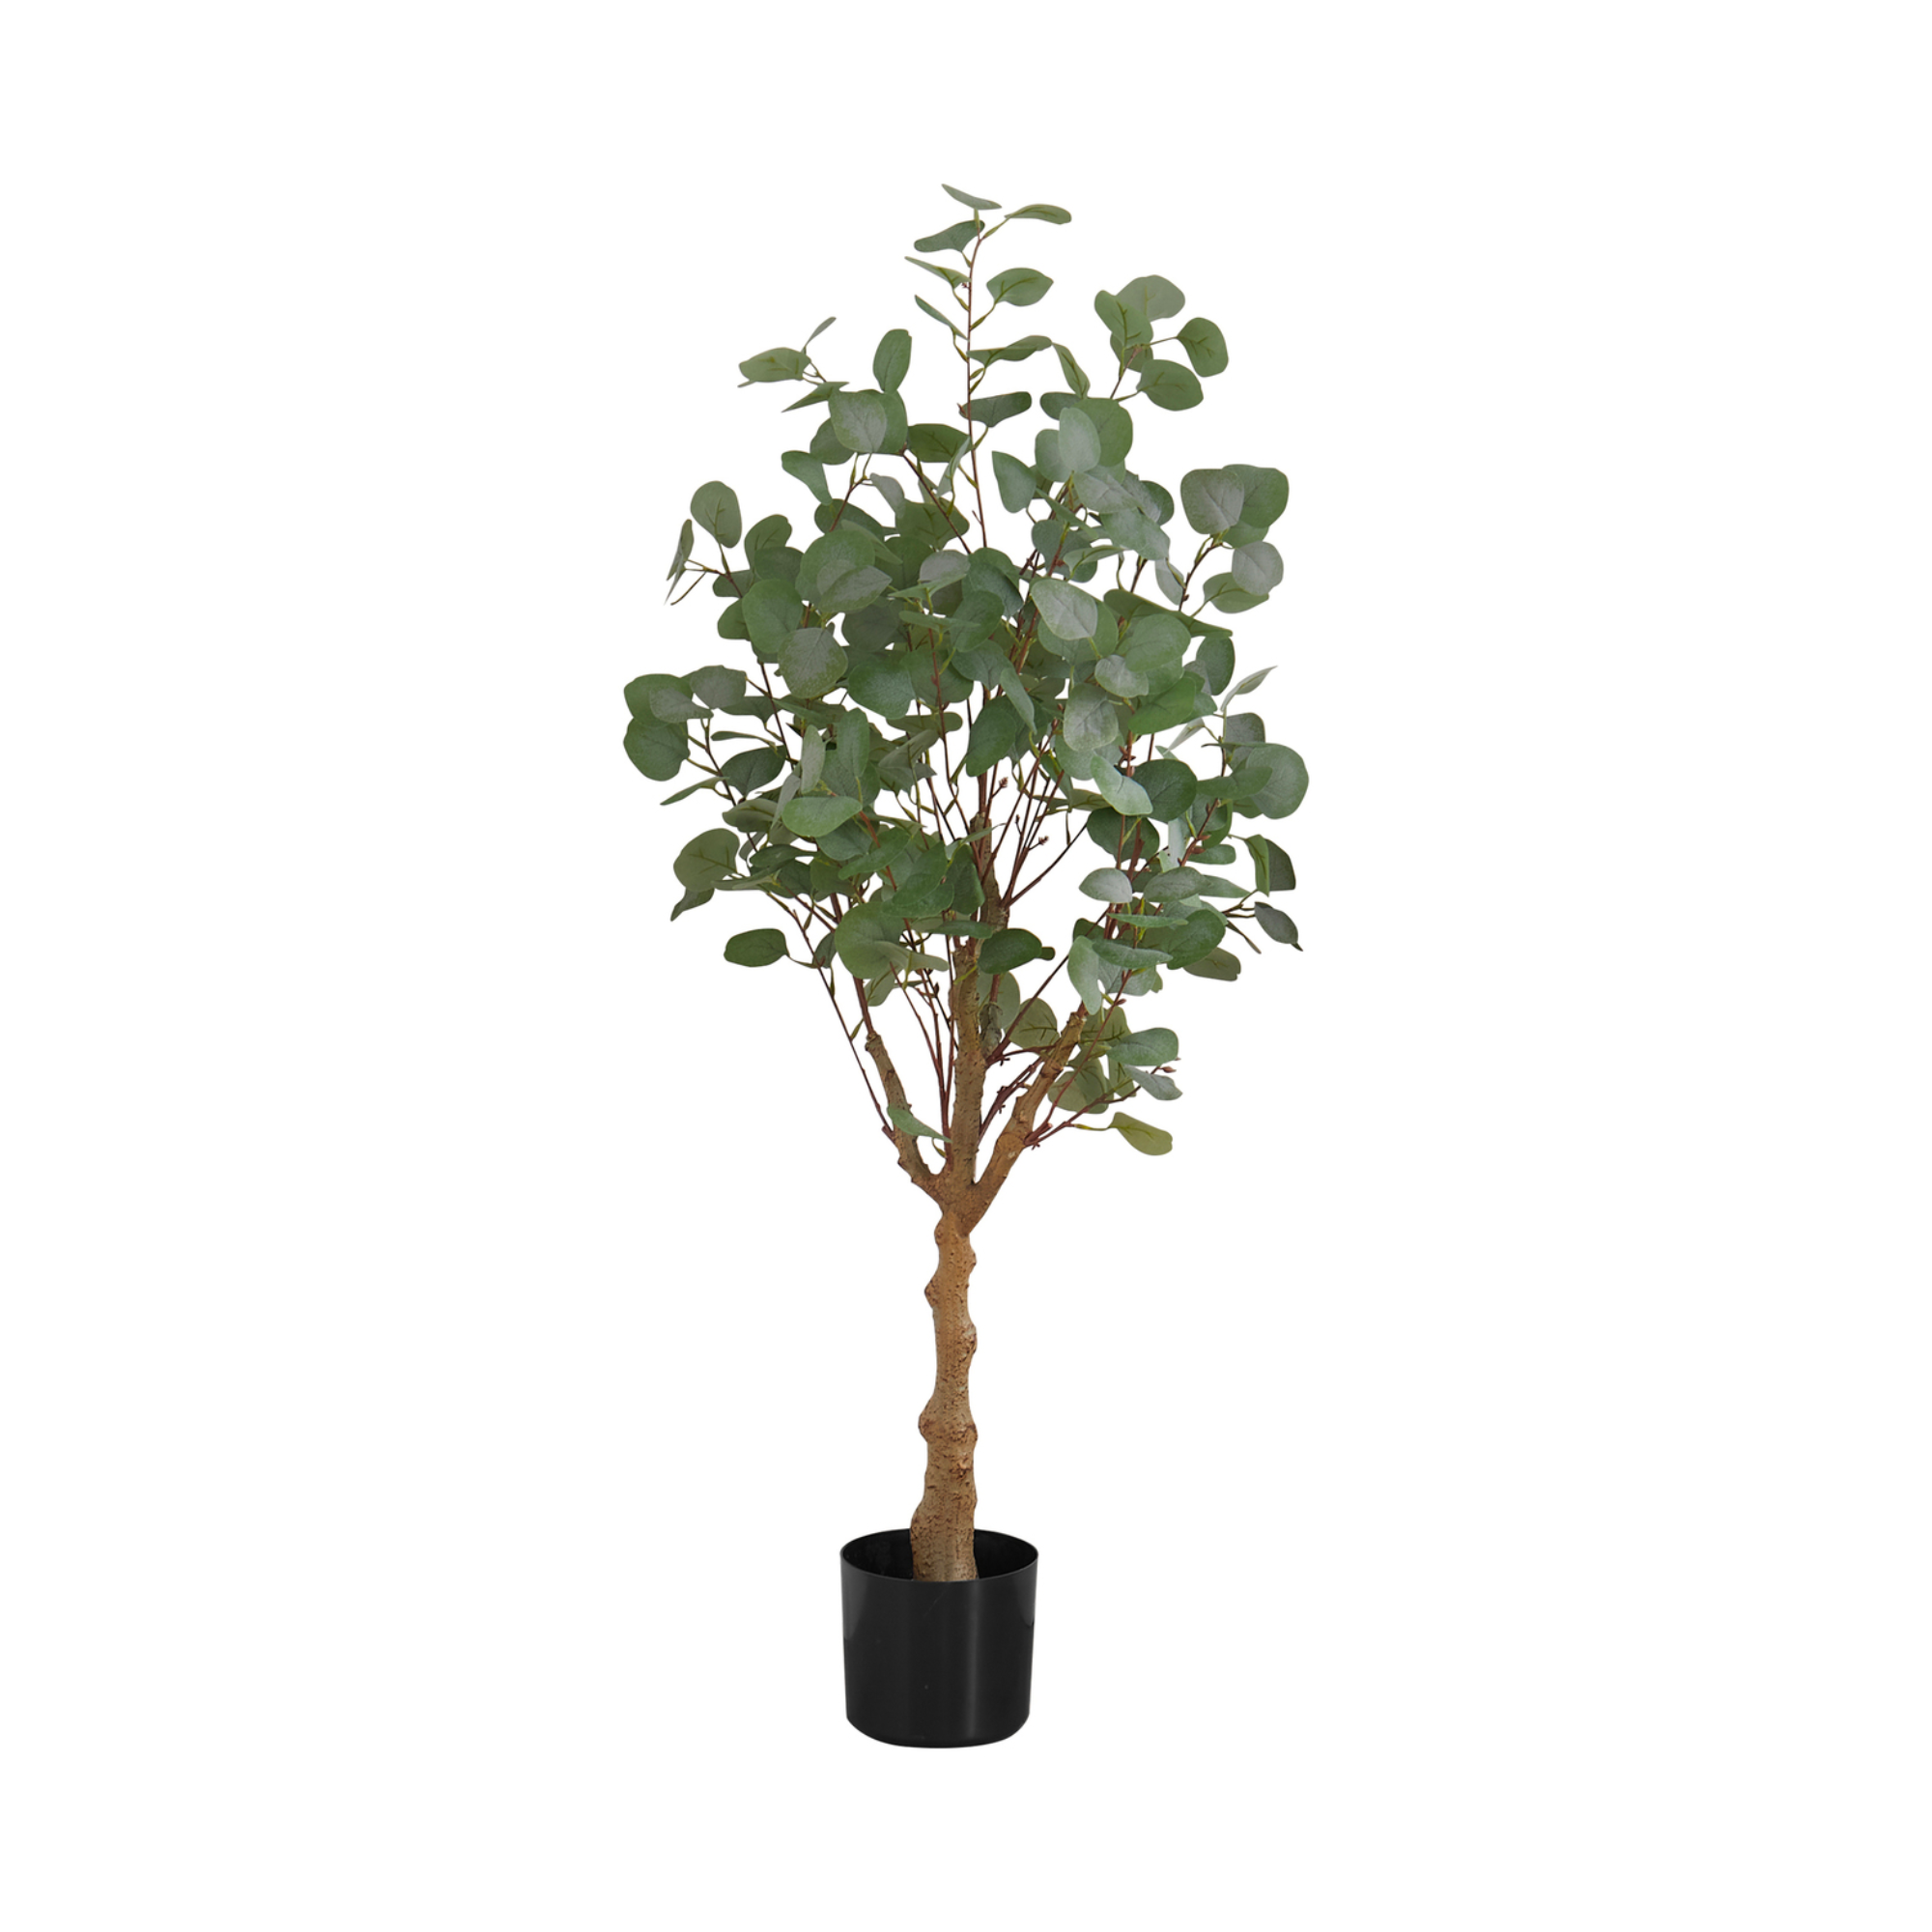 ARTIFICIAL PLANT - 46"H / INDOOR EUCALYPTUS TREE/ 5" POT